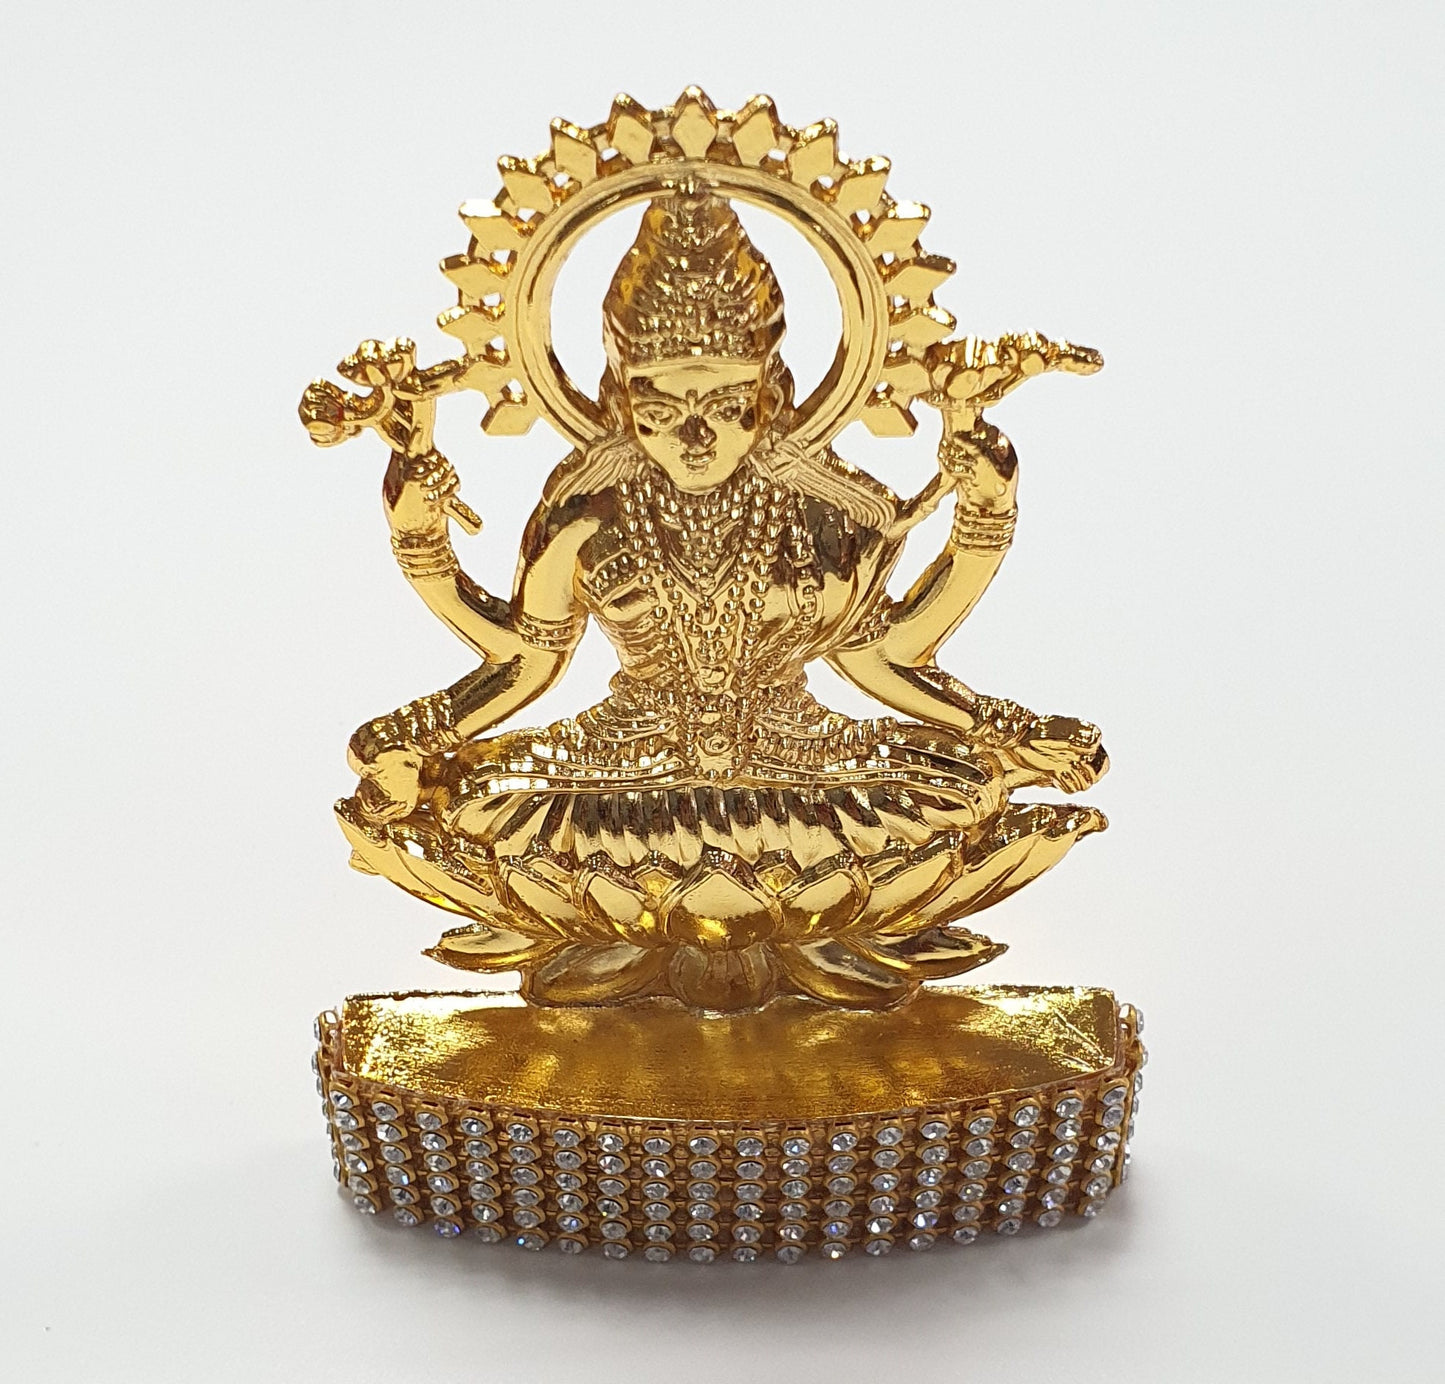 Goddess Lakshmi , Rare Stone Decorated, Gold Plated Idol Statue